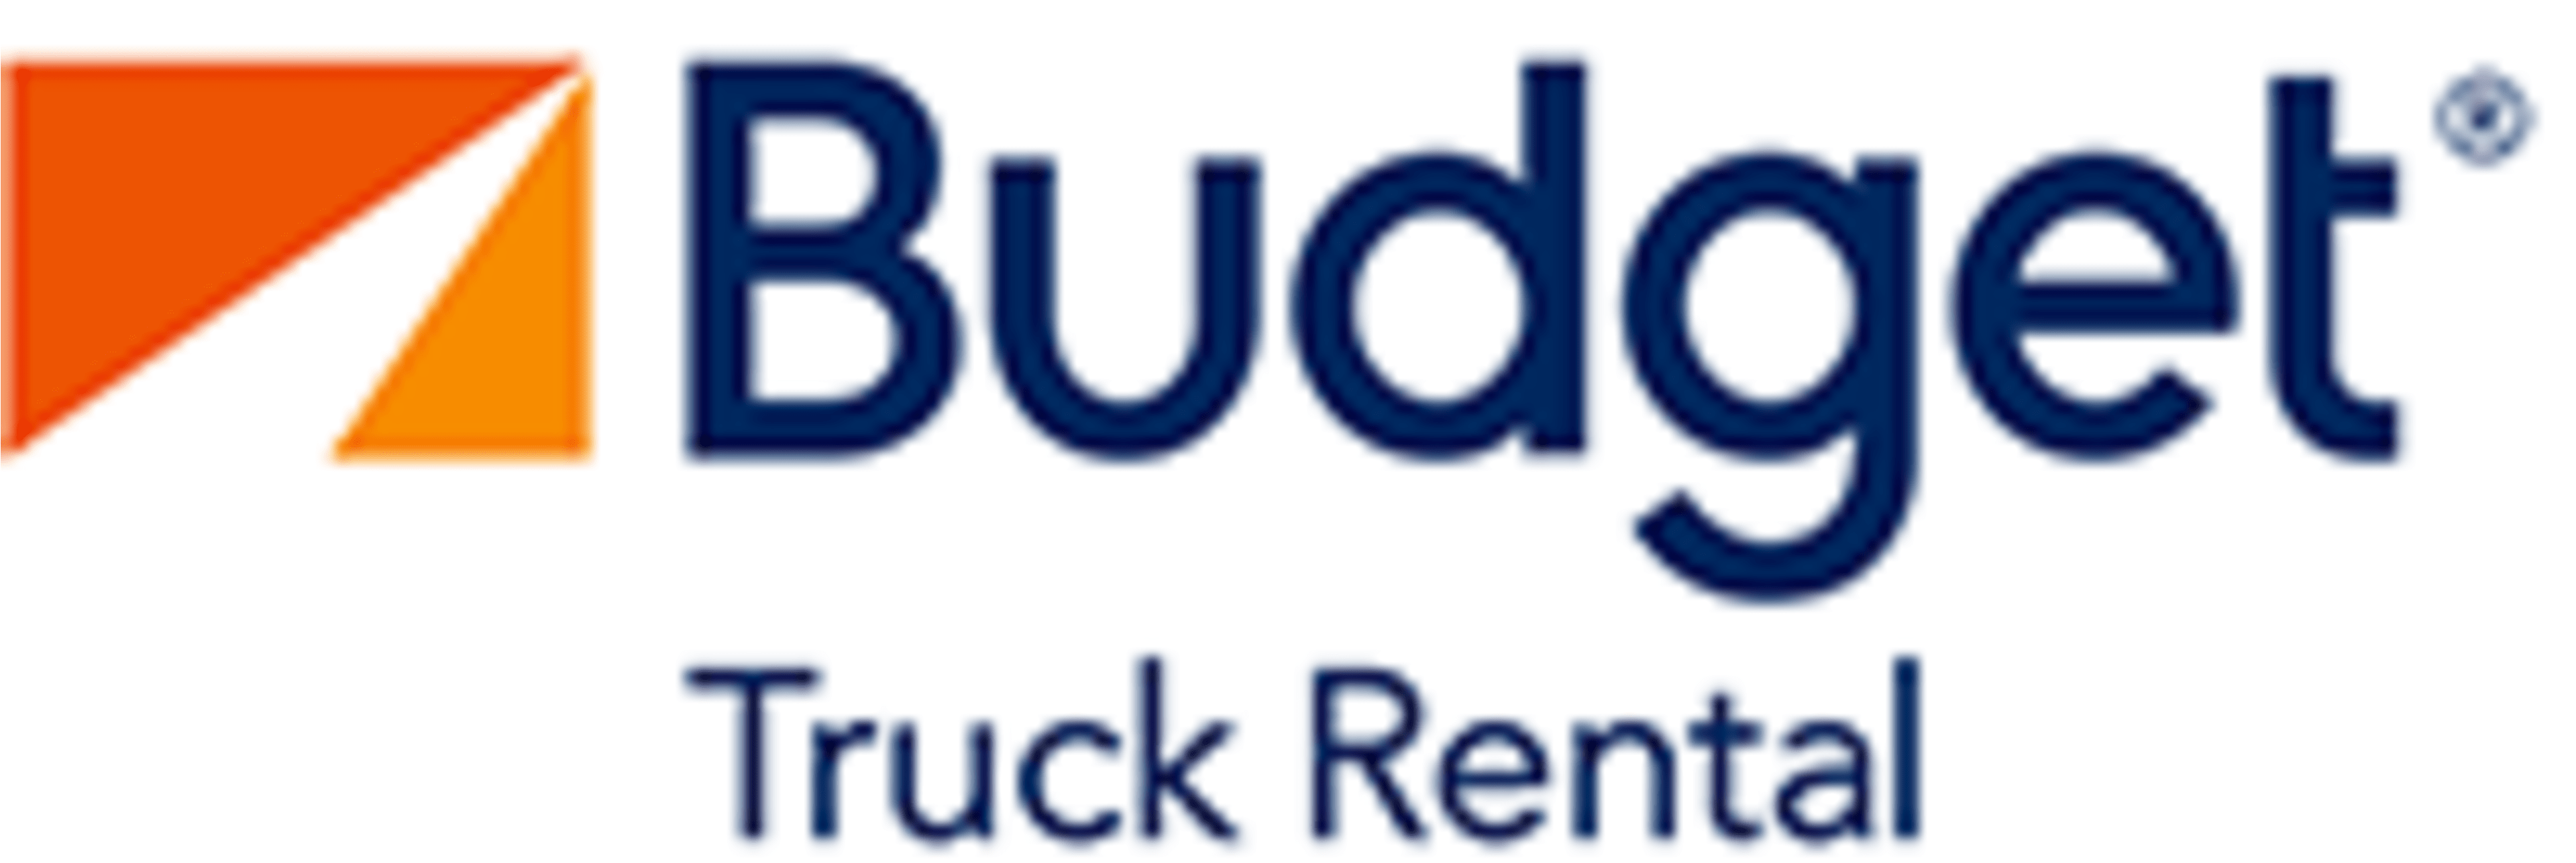 Budget Truck RentalCode